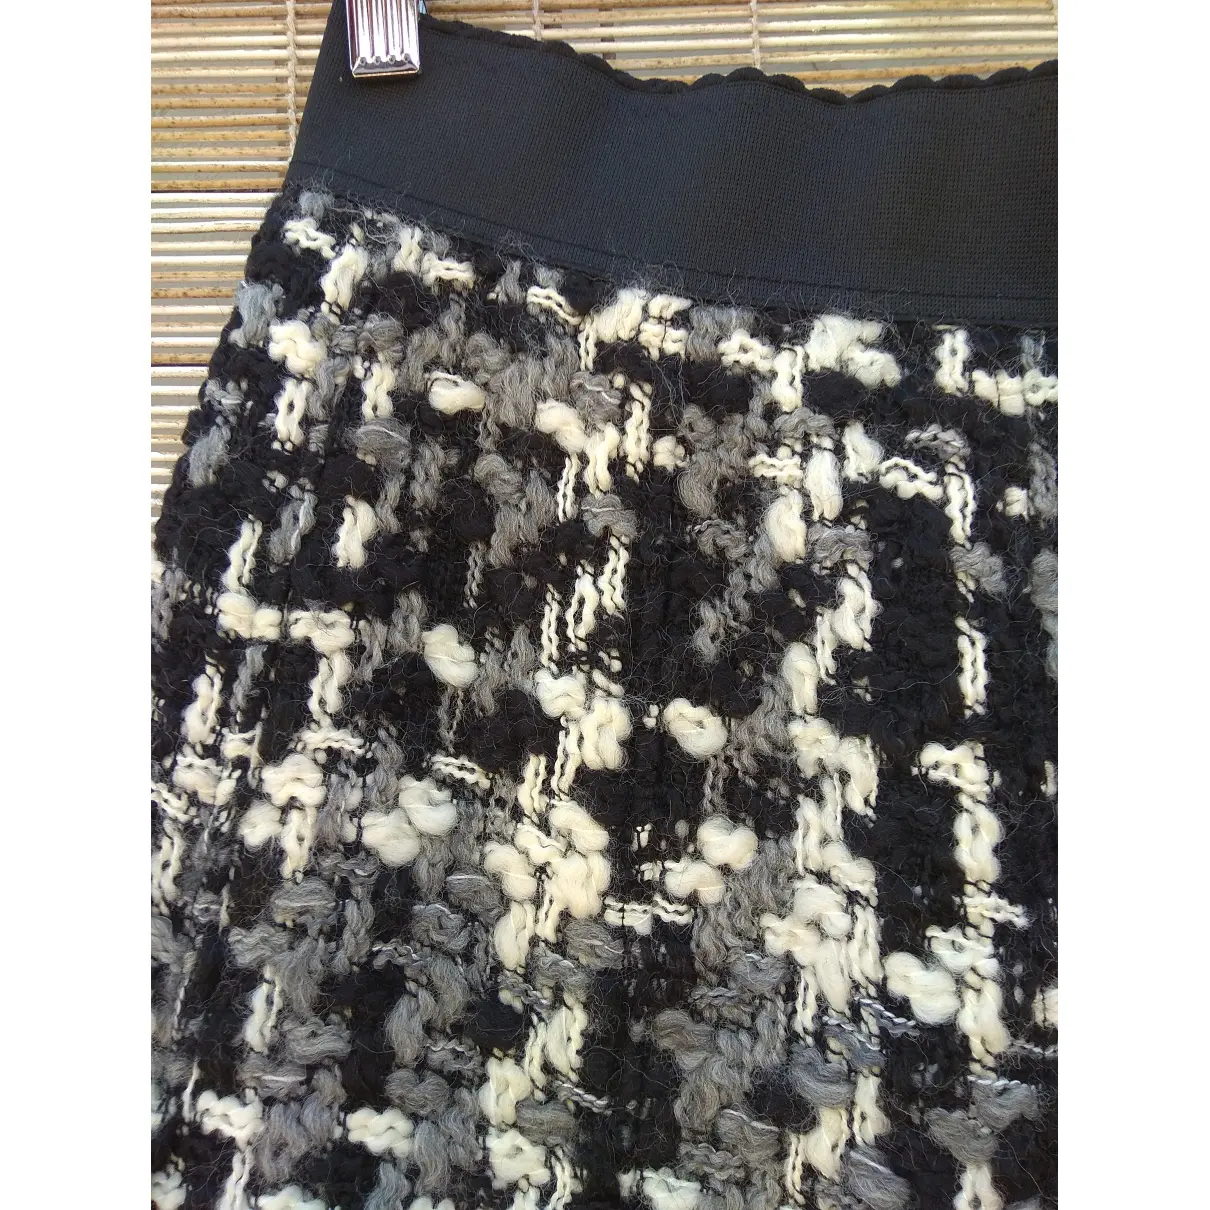 Wool mid-length skirt Dolce & Gabbana